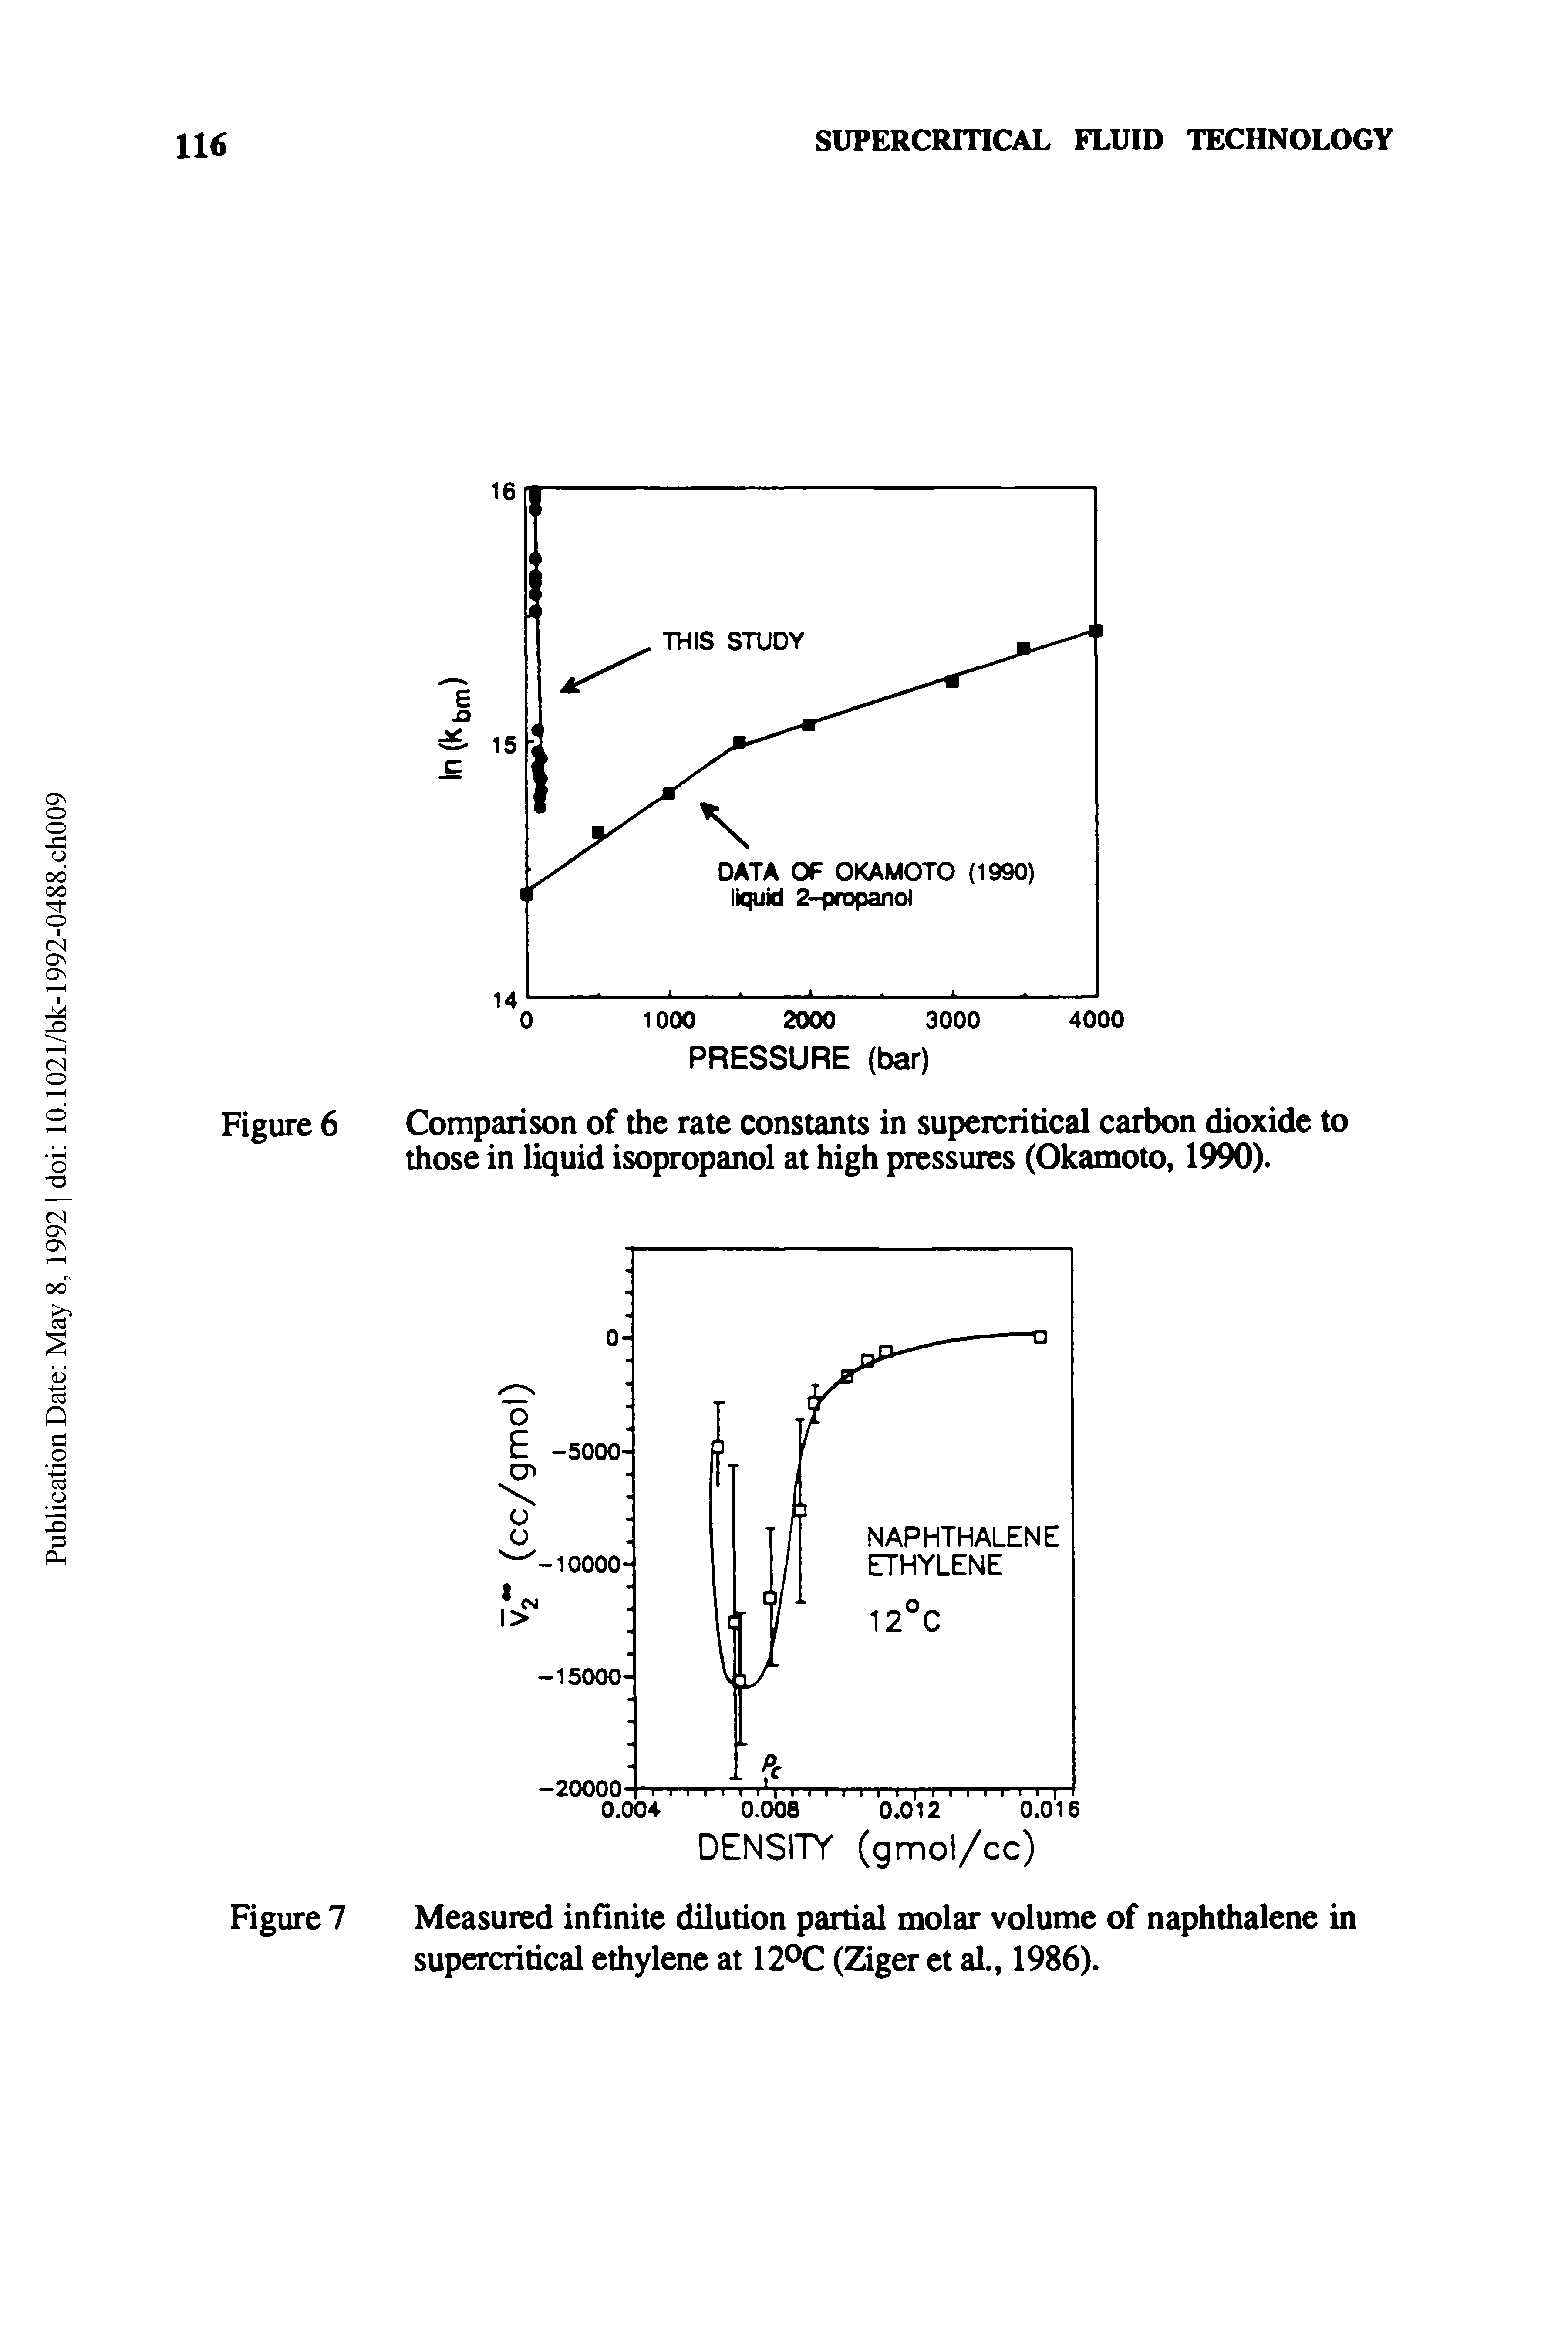 Figure 7 Measured infinite dilution partial molar volume of naphthalene in supercritical ethylene at 12°C (Ziger et al., 1986).